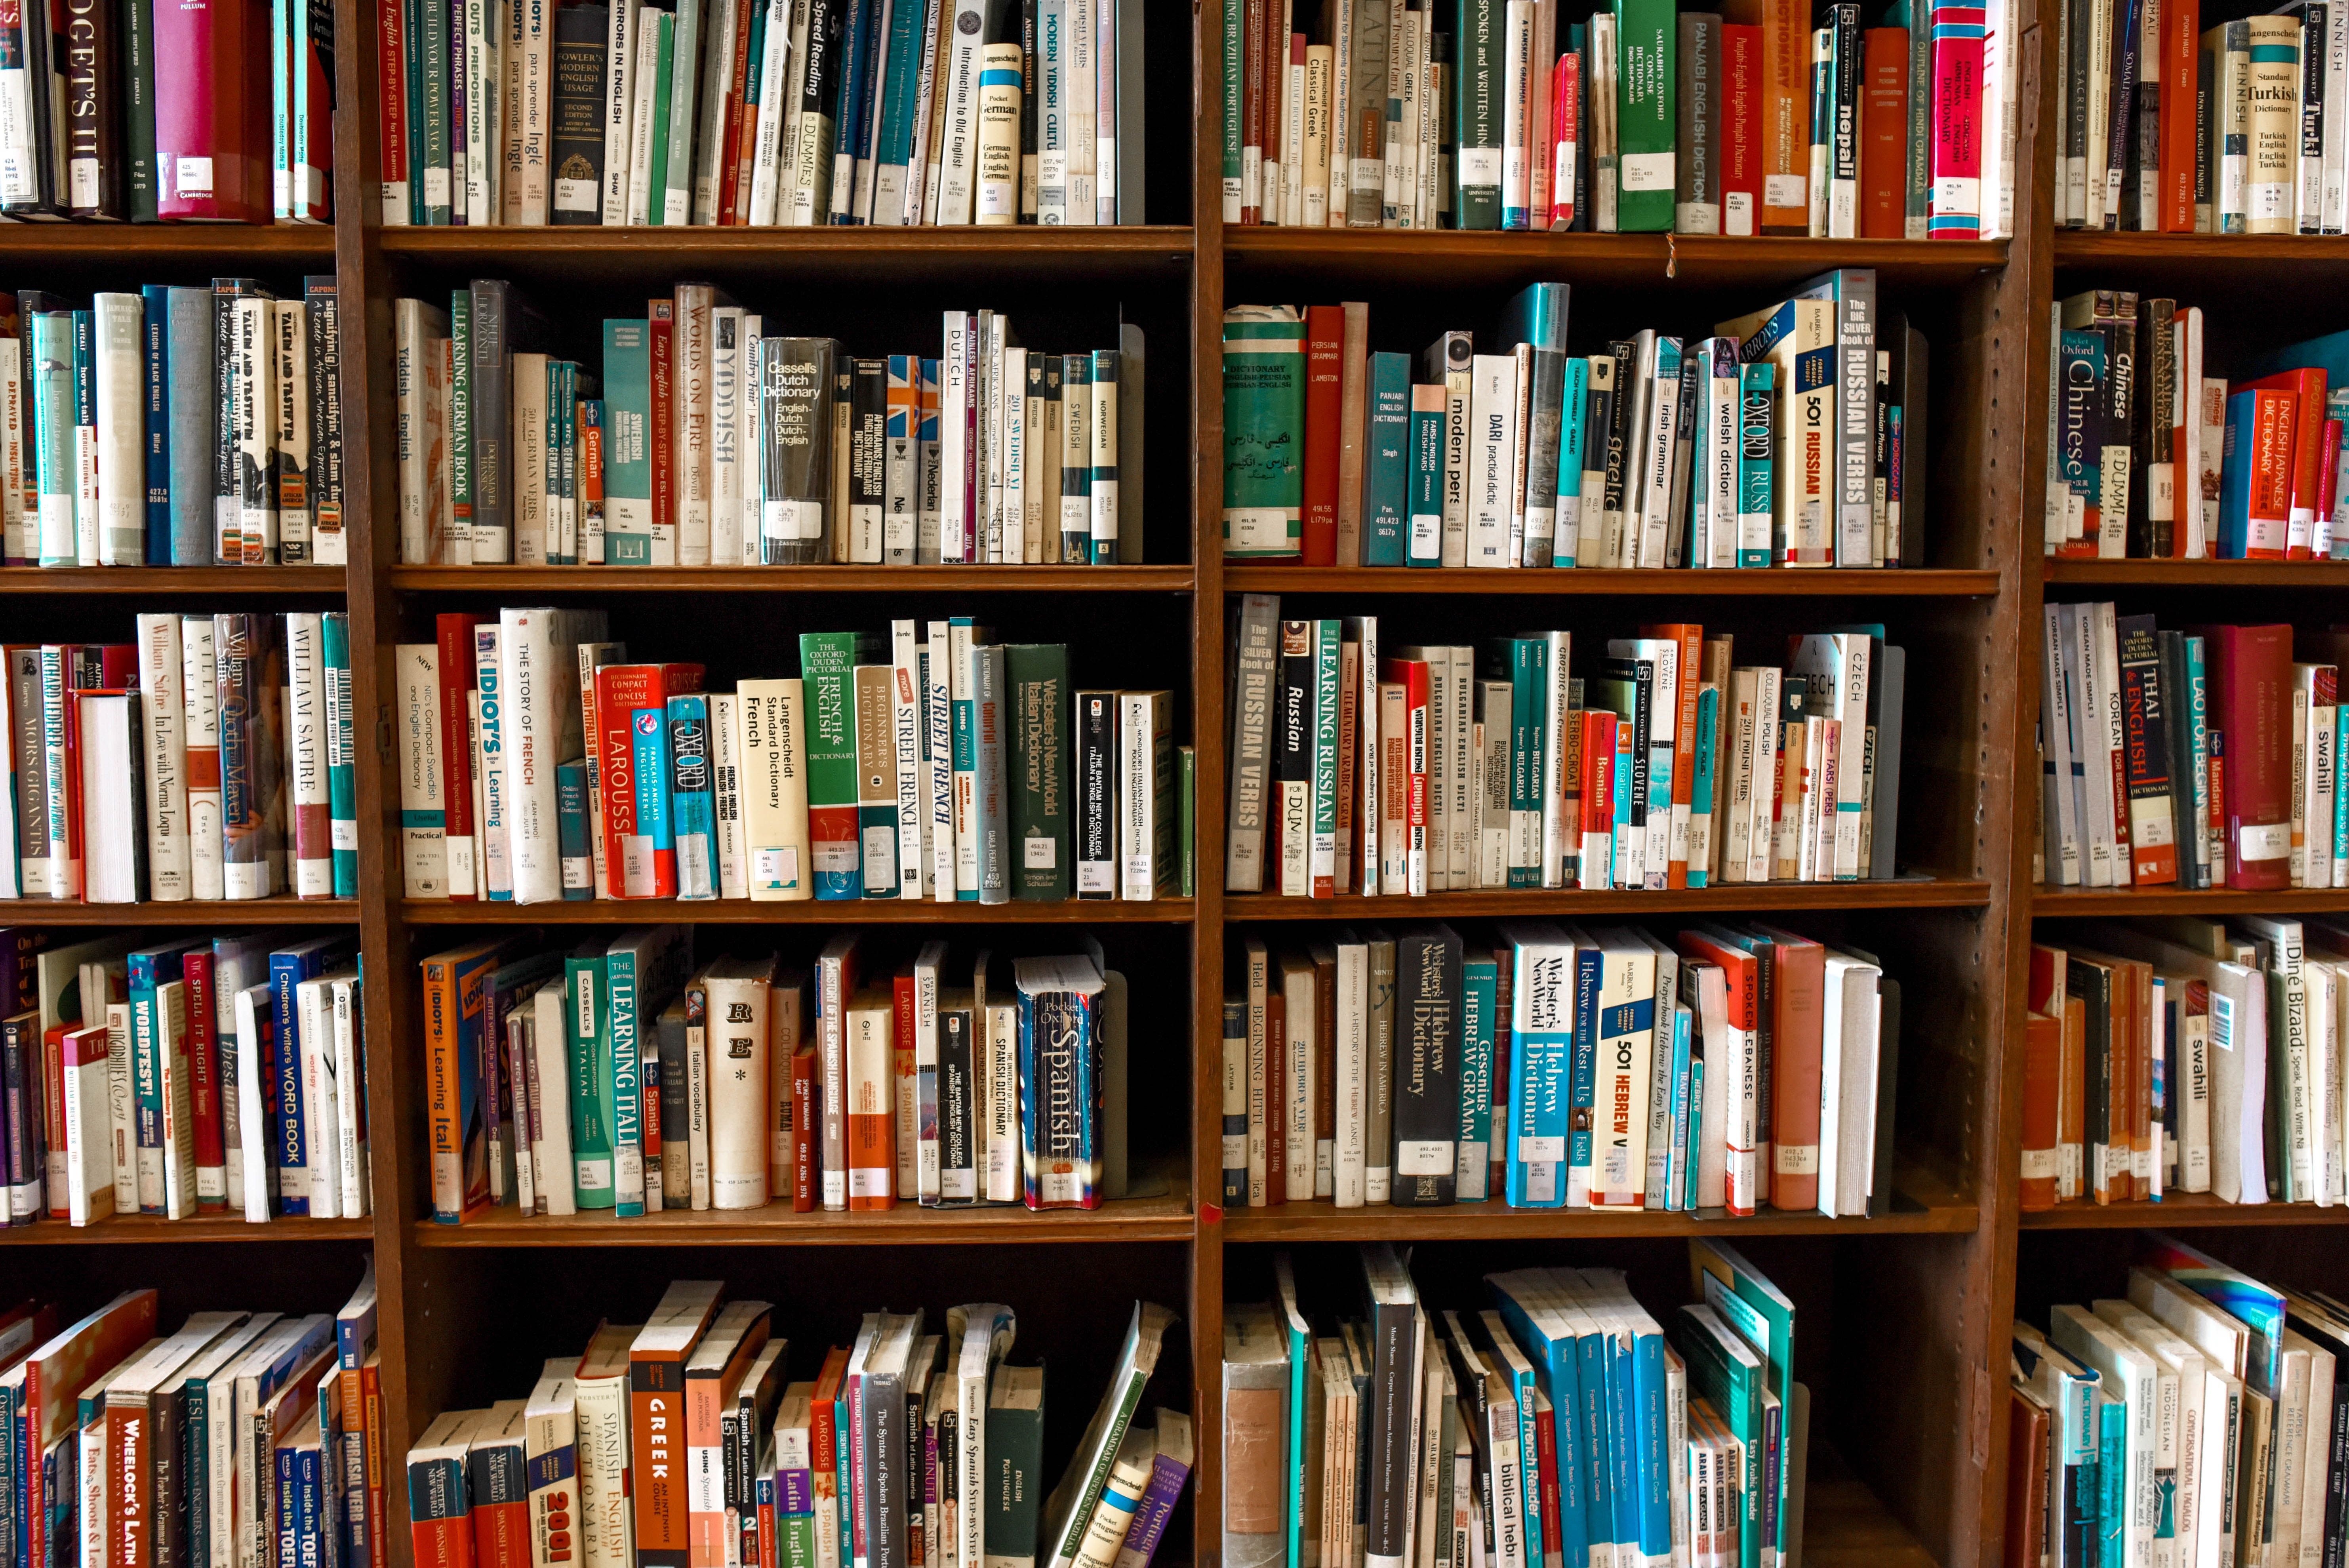 A bookshelf filled with many books on it - Bookshelf